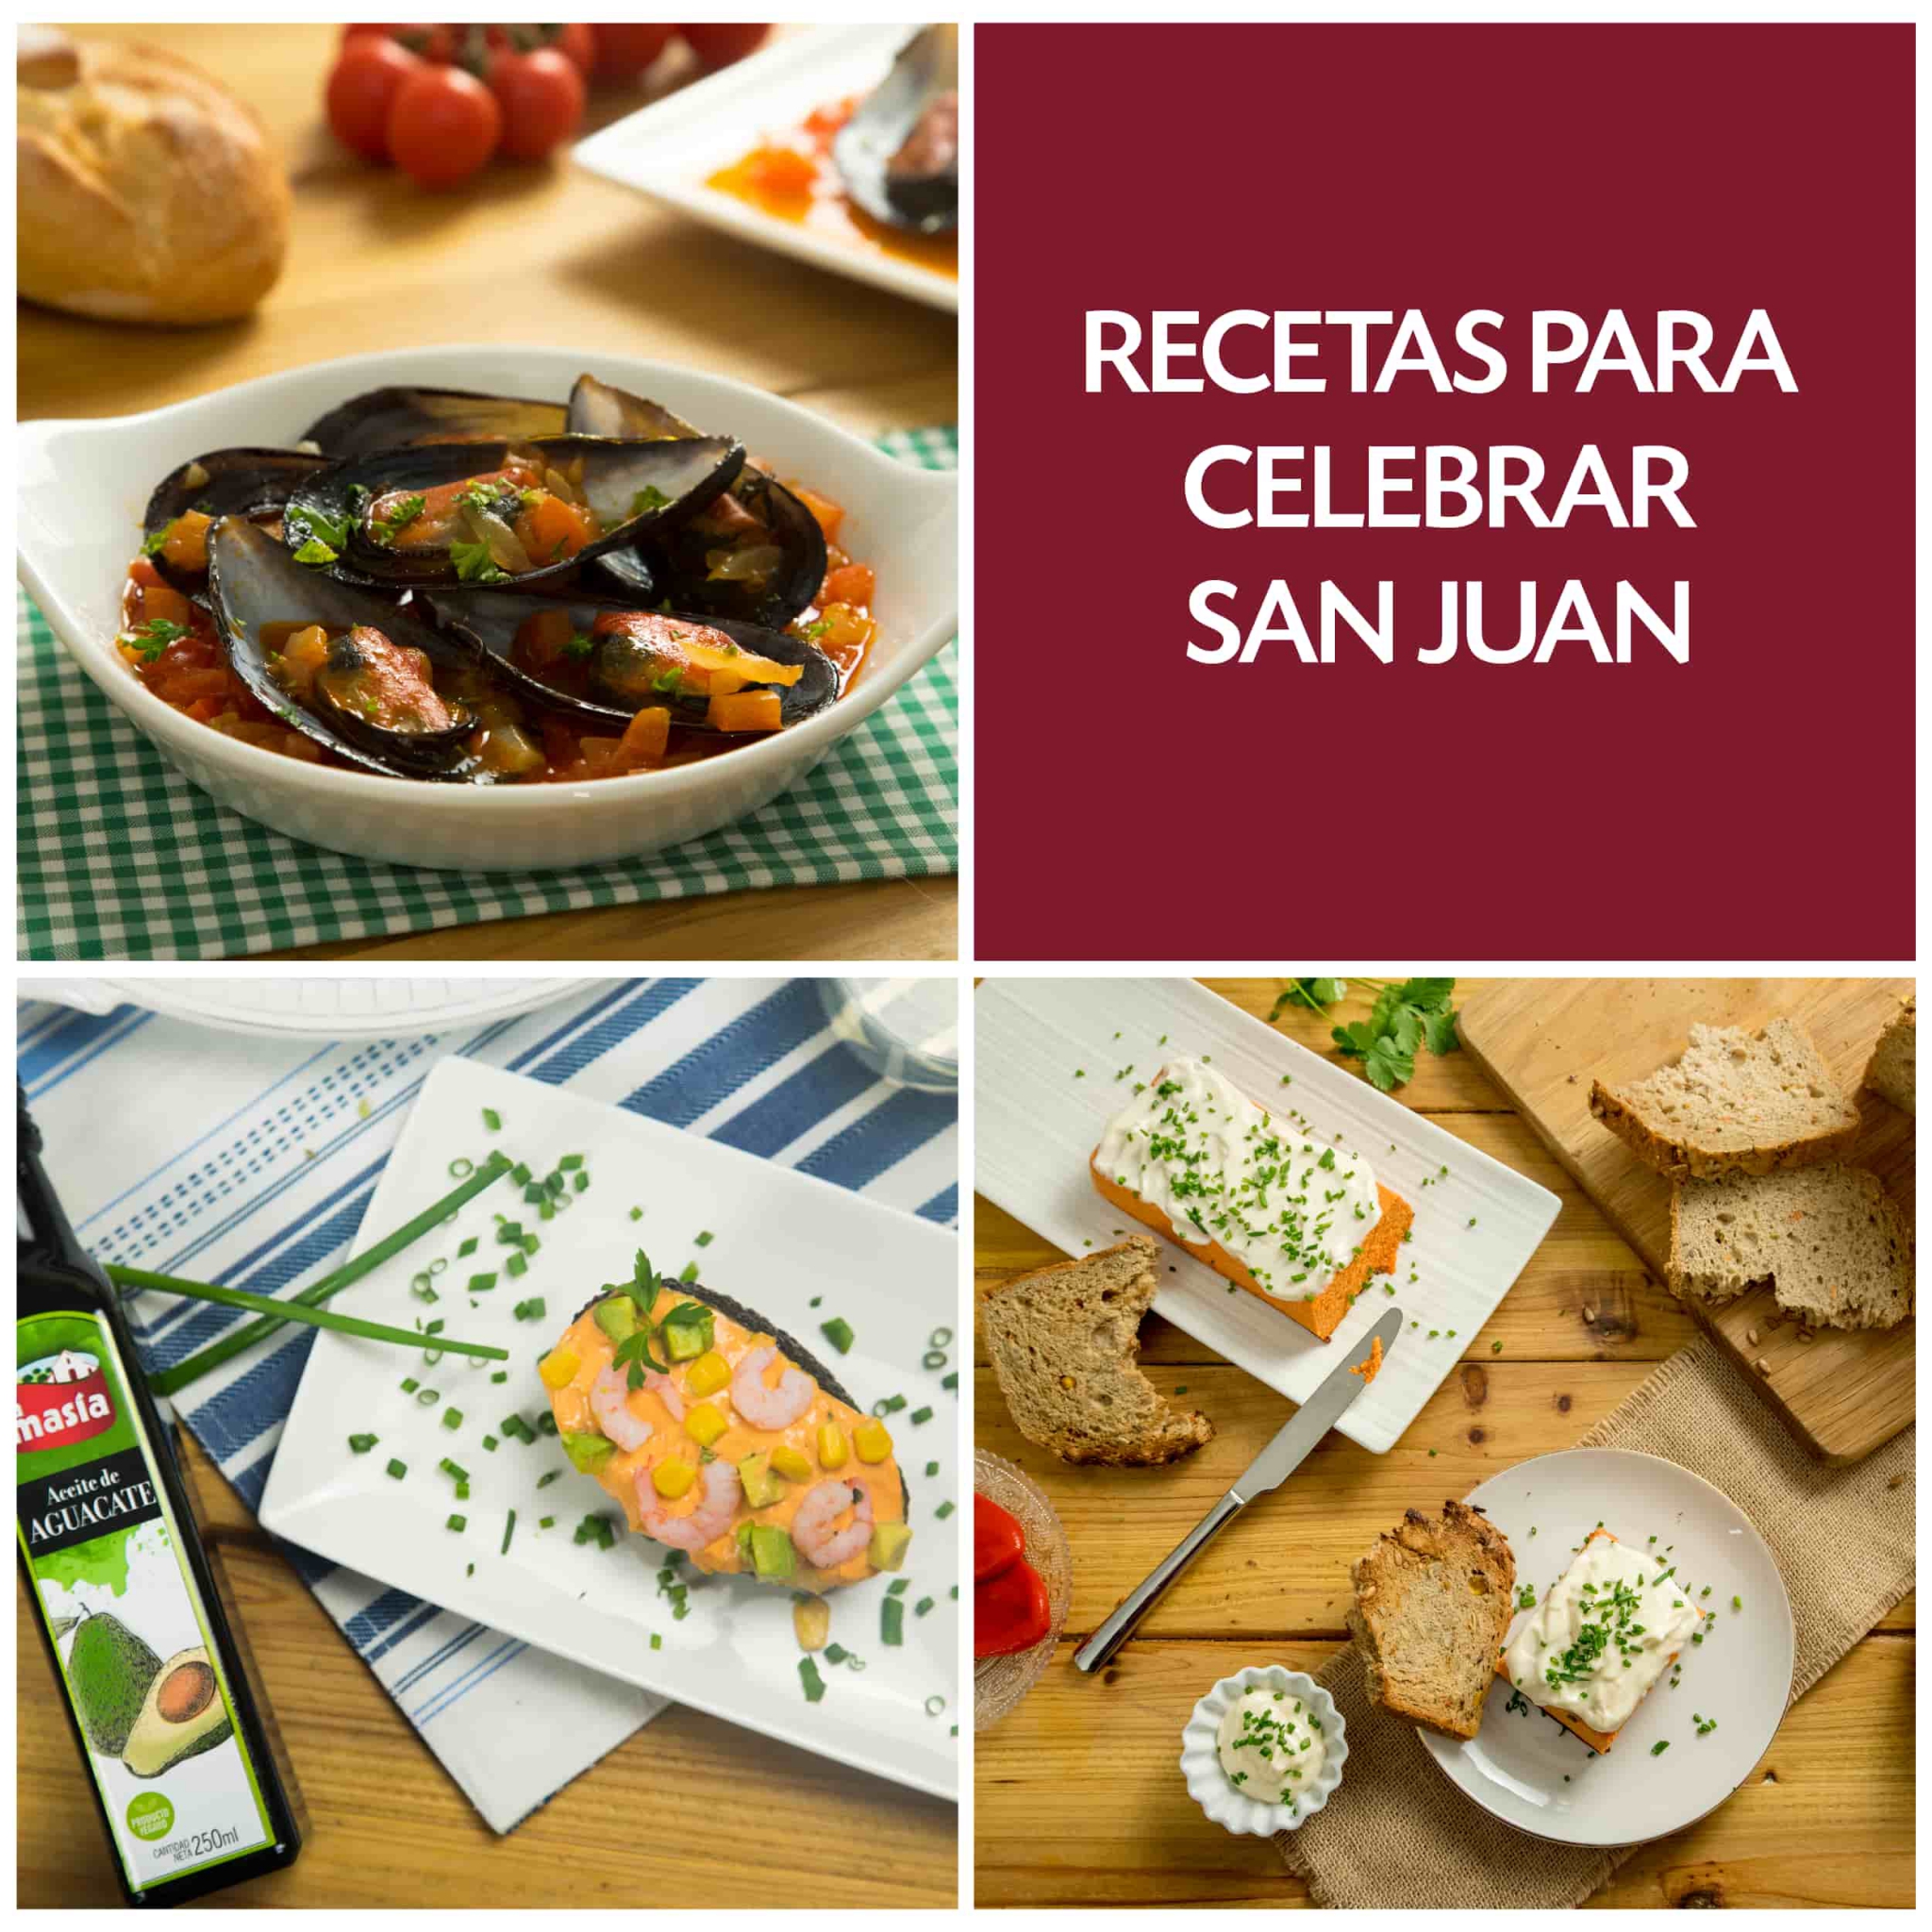 Recetas para celebrar San Juan